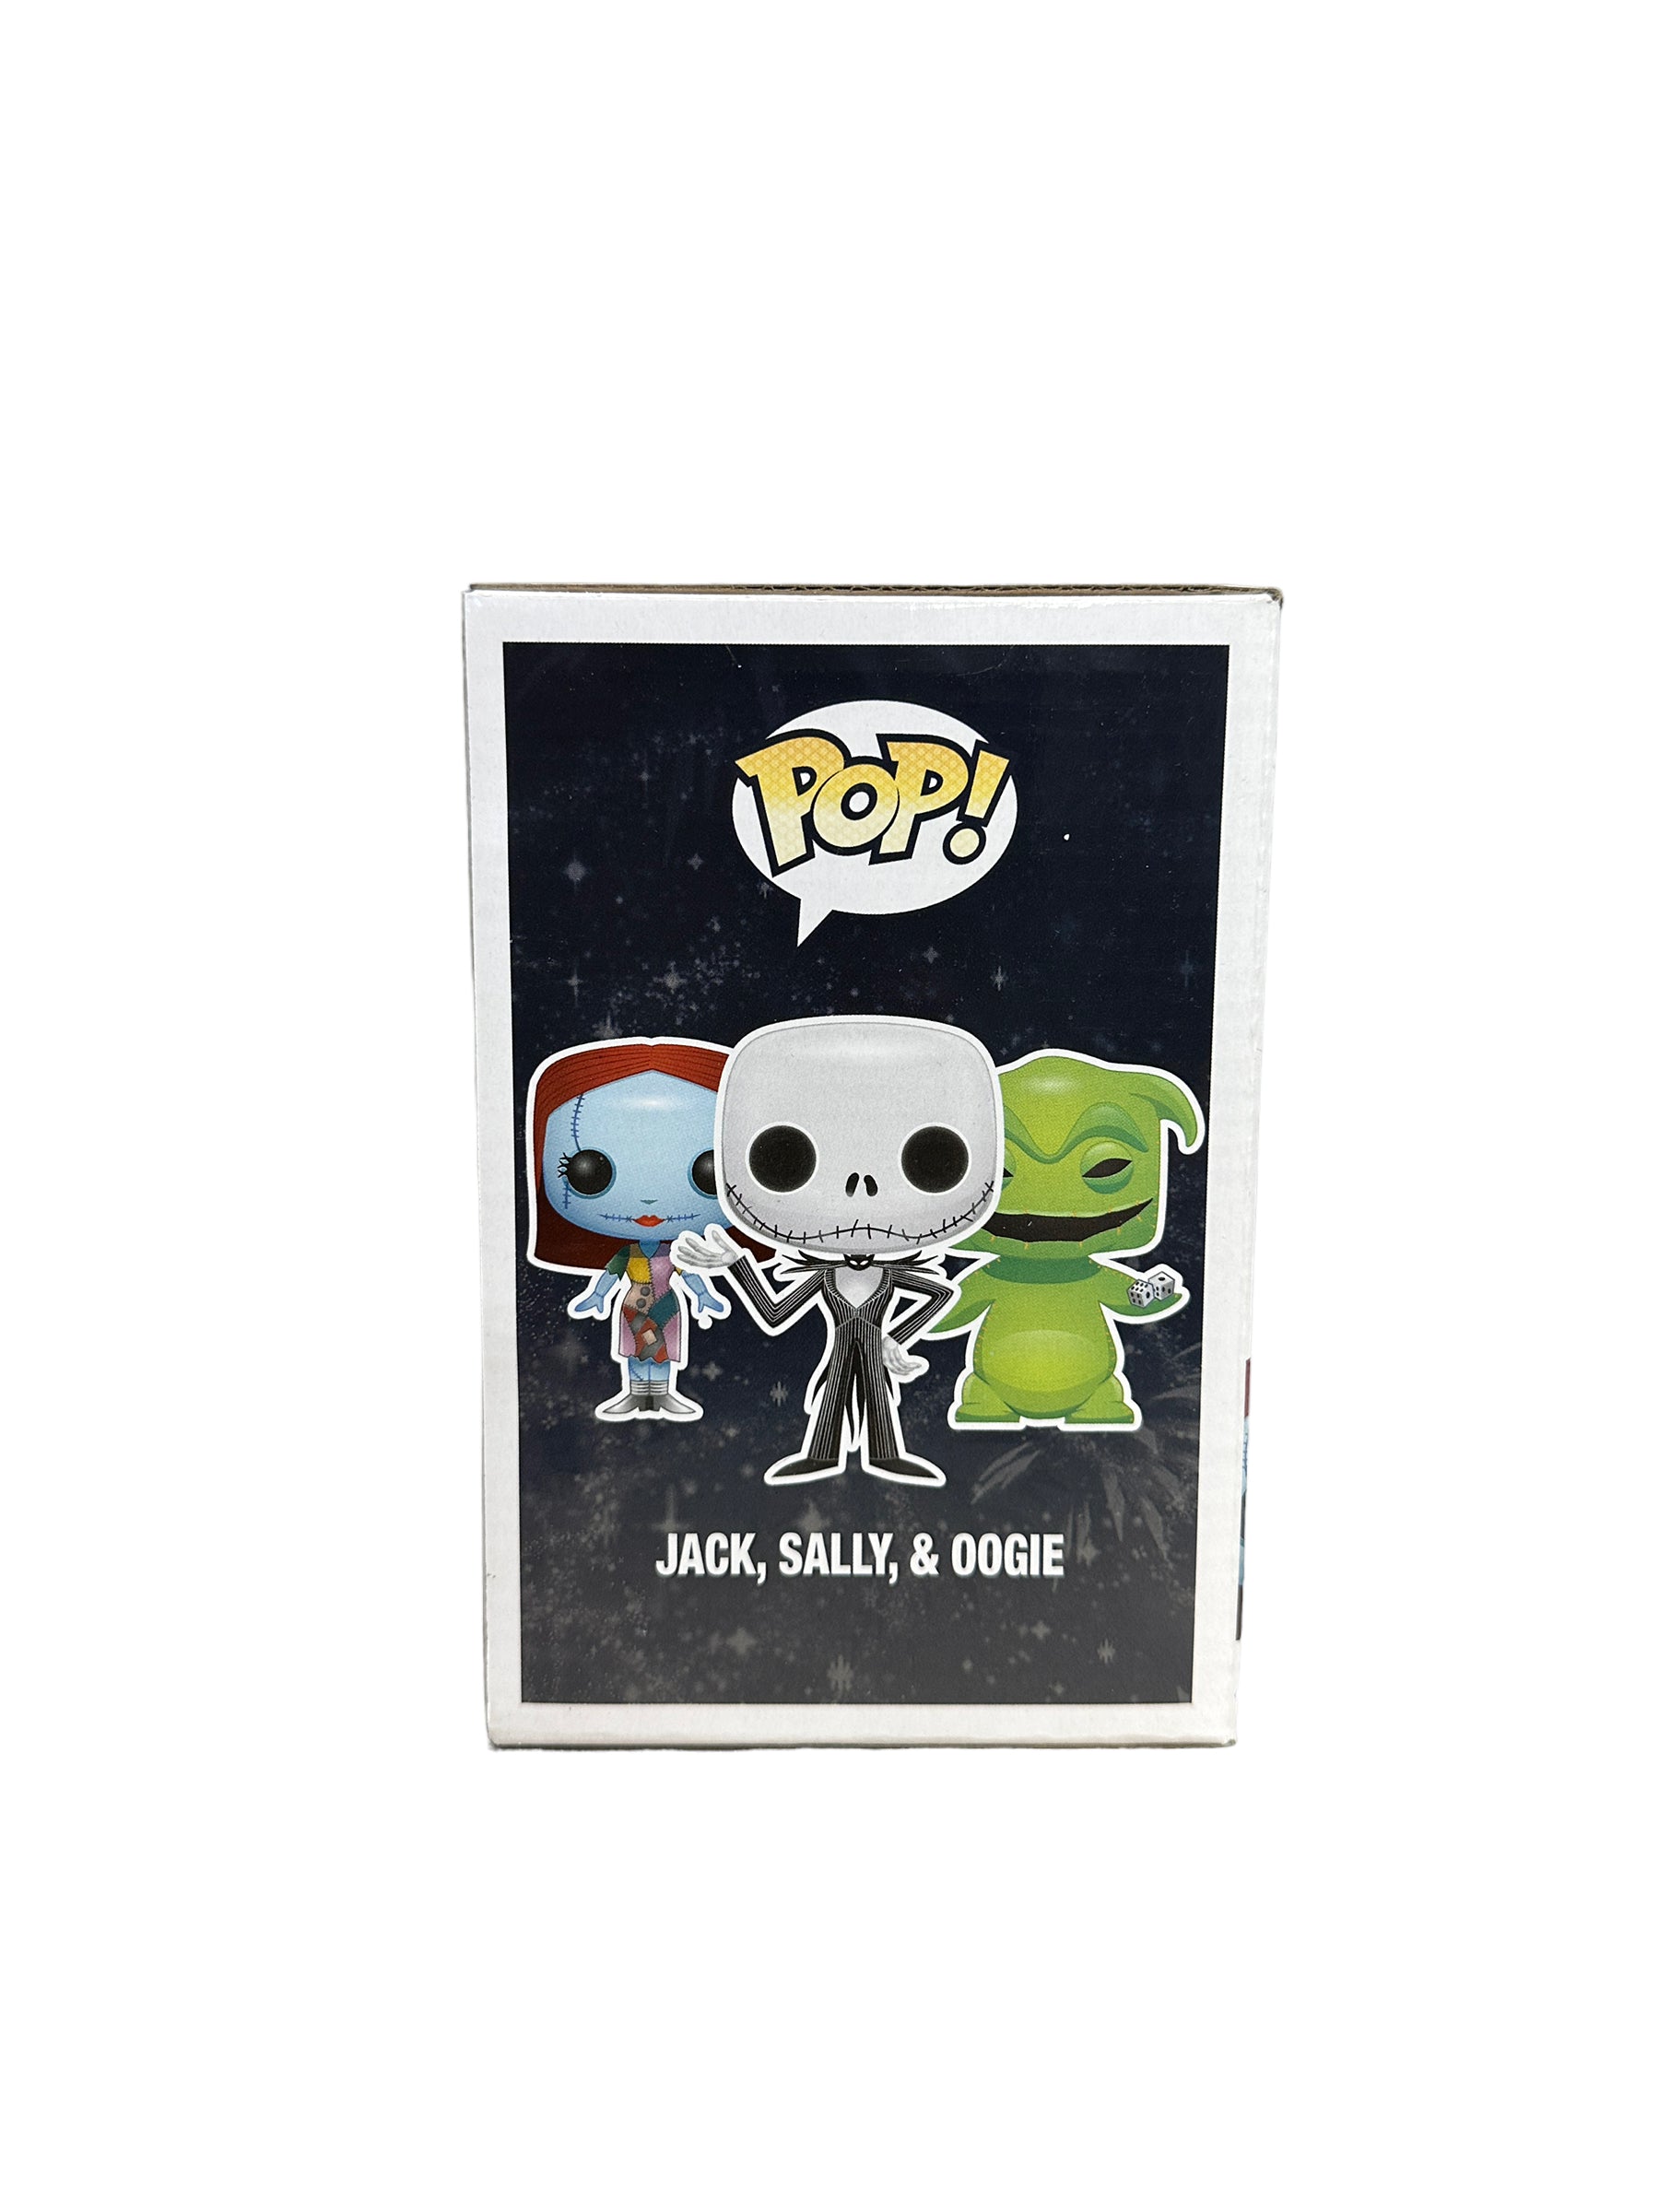 Jack, Sally, & Oogie (Metallic) 3 Pack Funko Pop! - Disney - D23 Expo 2013 Exclusive LE500 Pcs - Condition 9/10